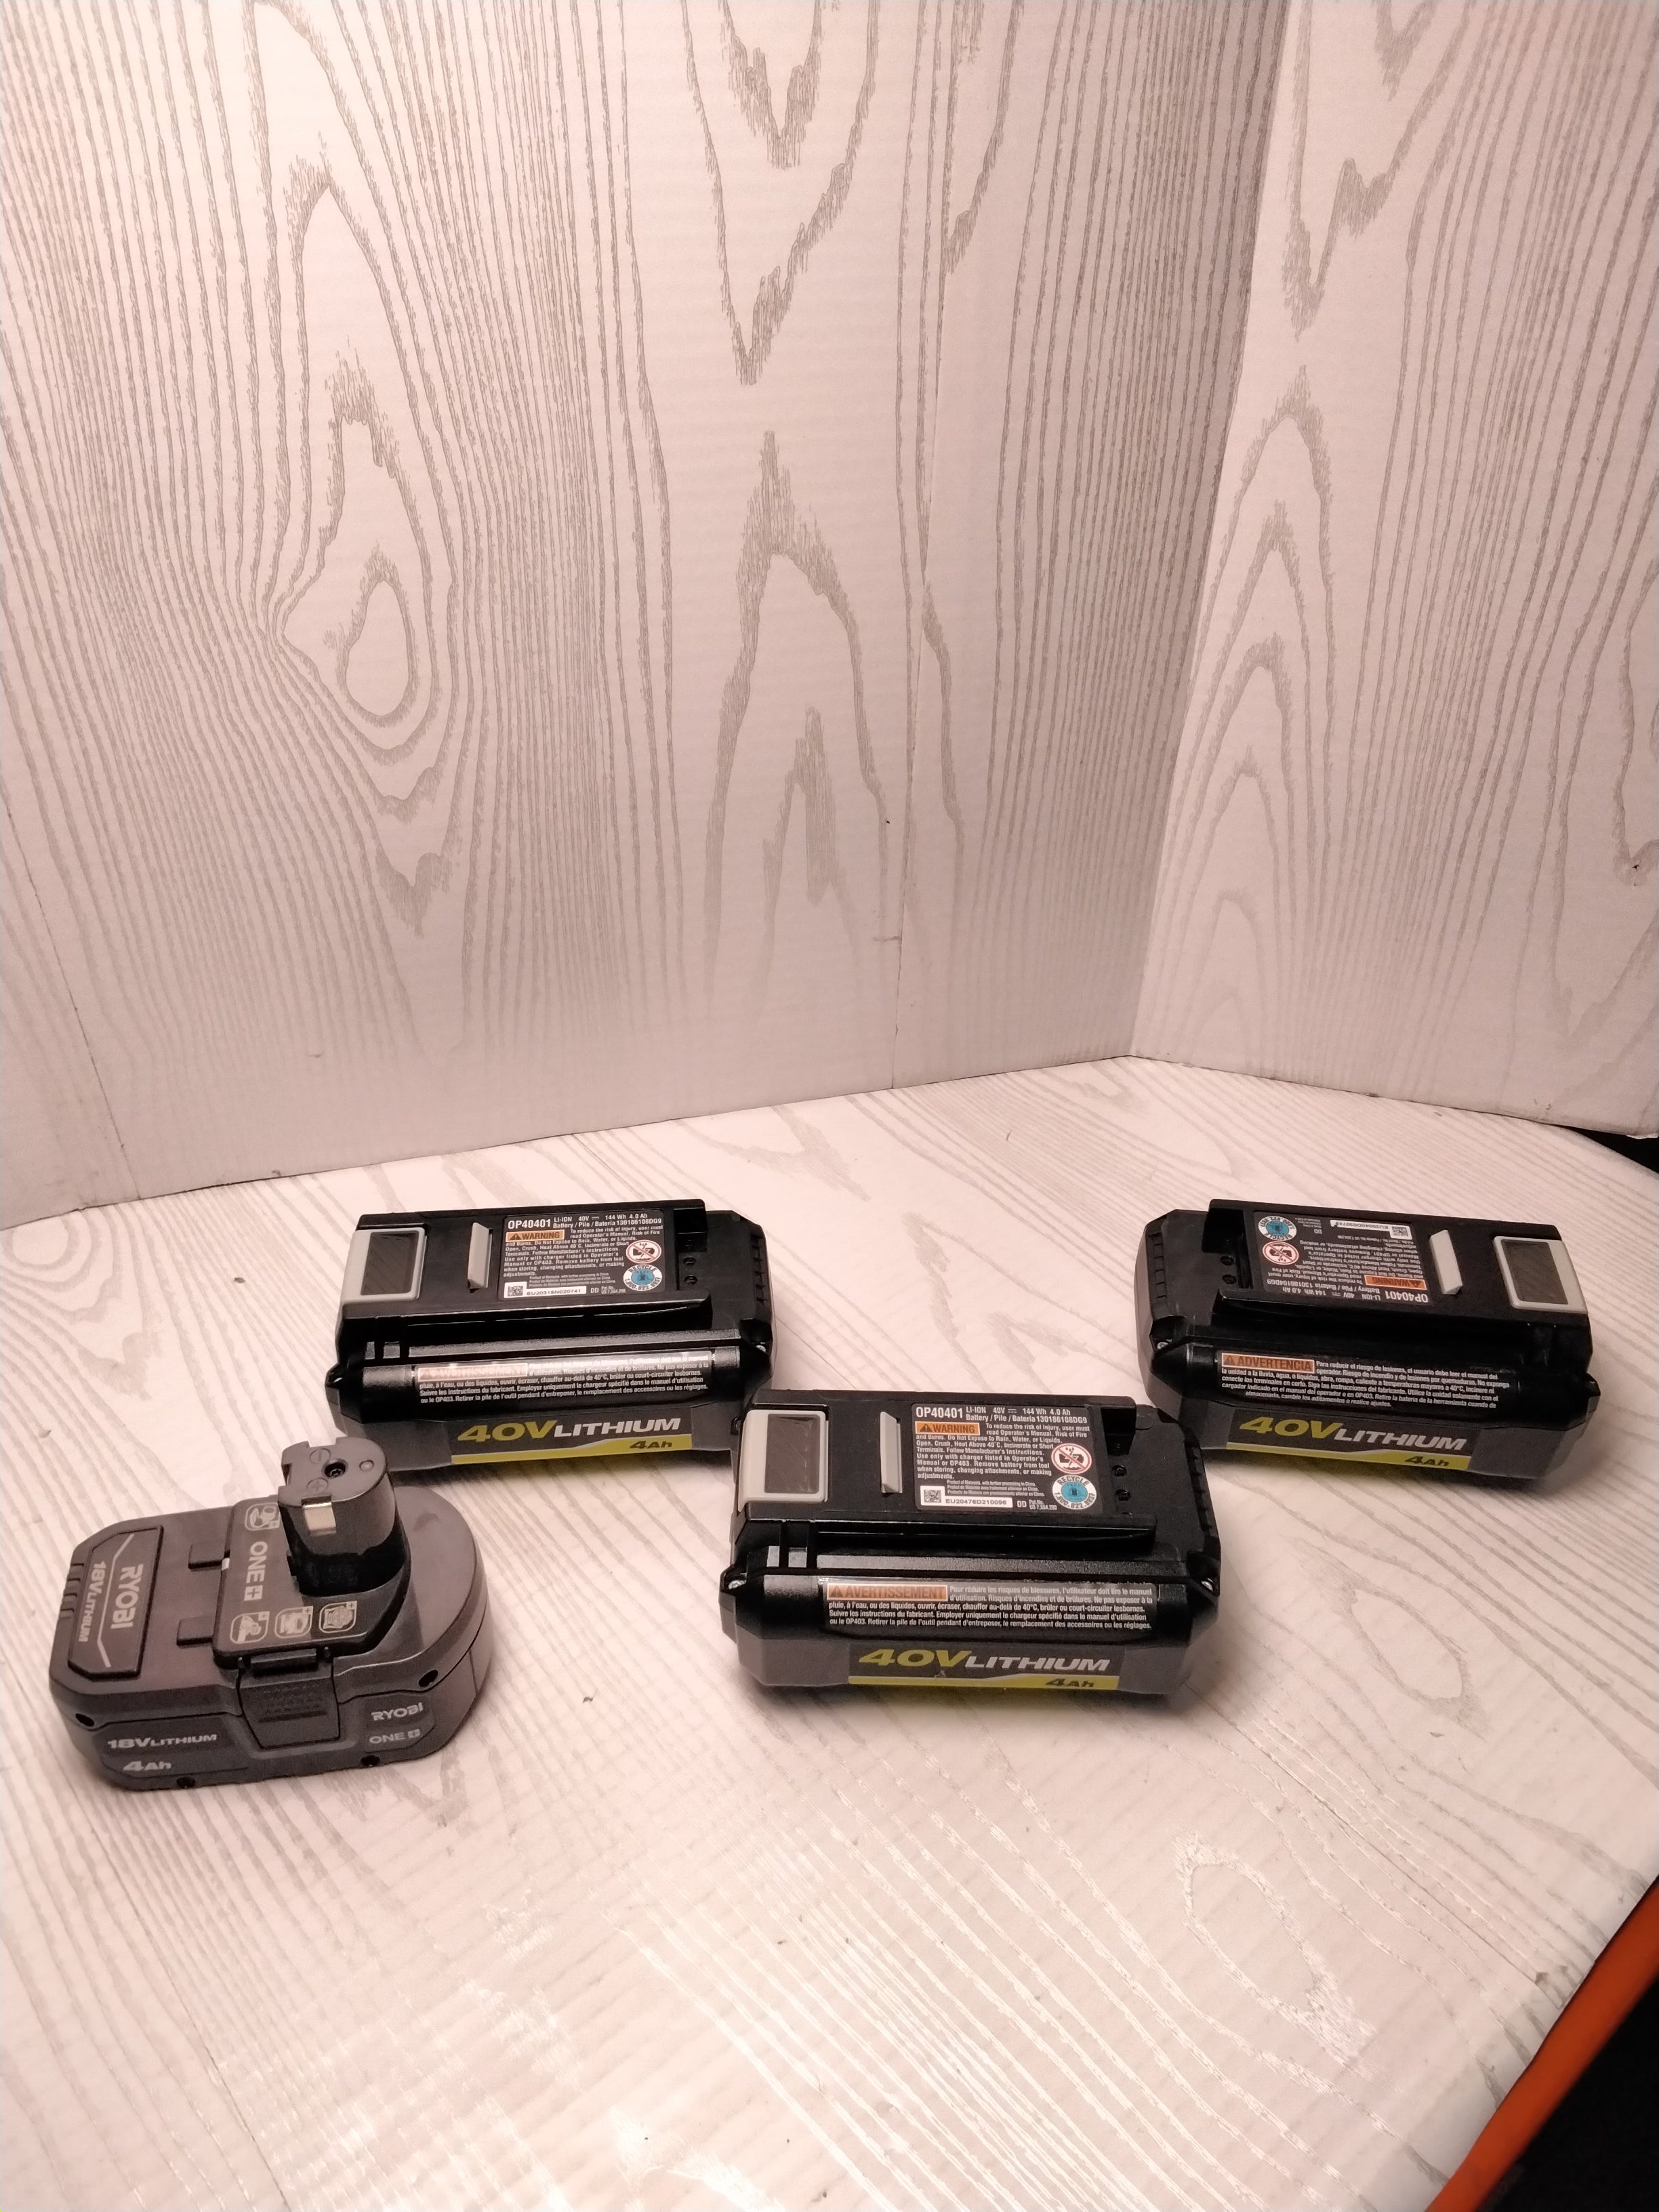 *FOR PARTS, READ* Set of 4 Ryobi Batteries - 3, 40v, 4AH & 1, 18v, 4AH (7855575236846)